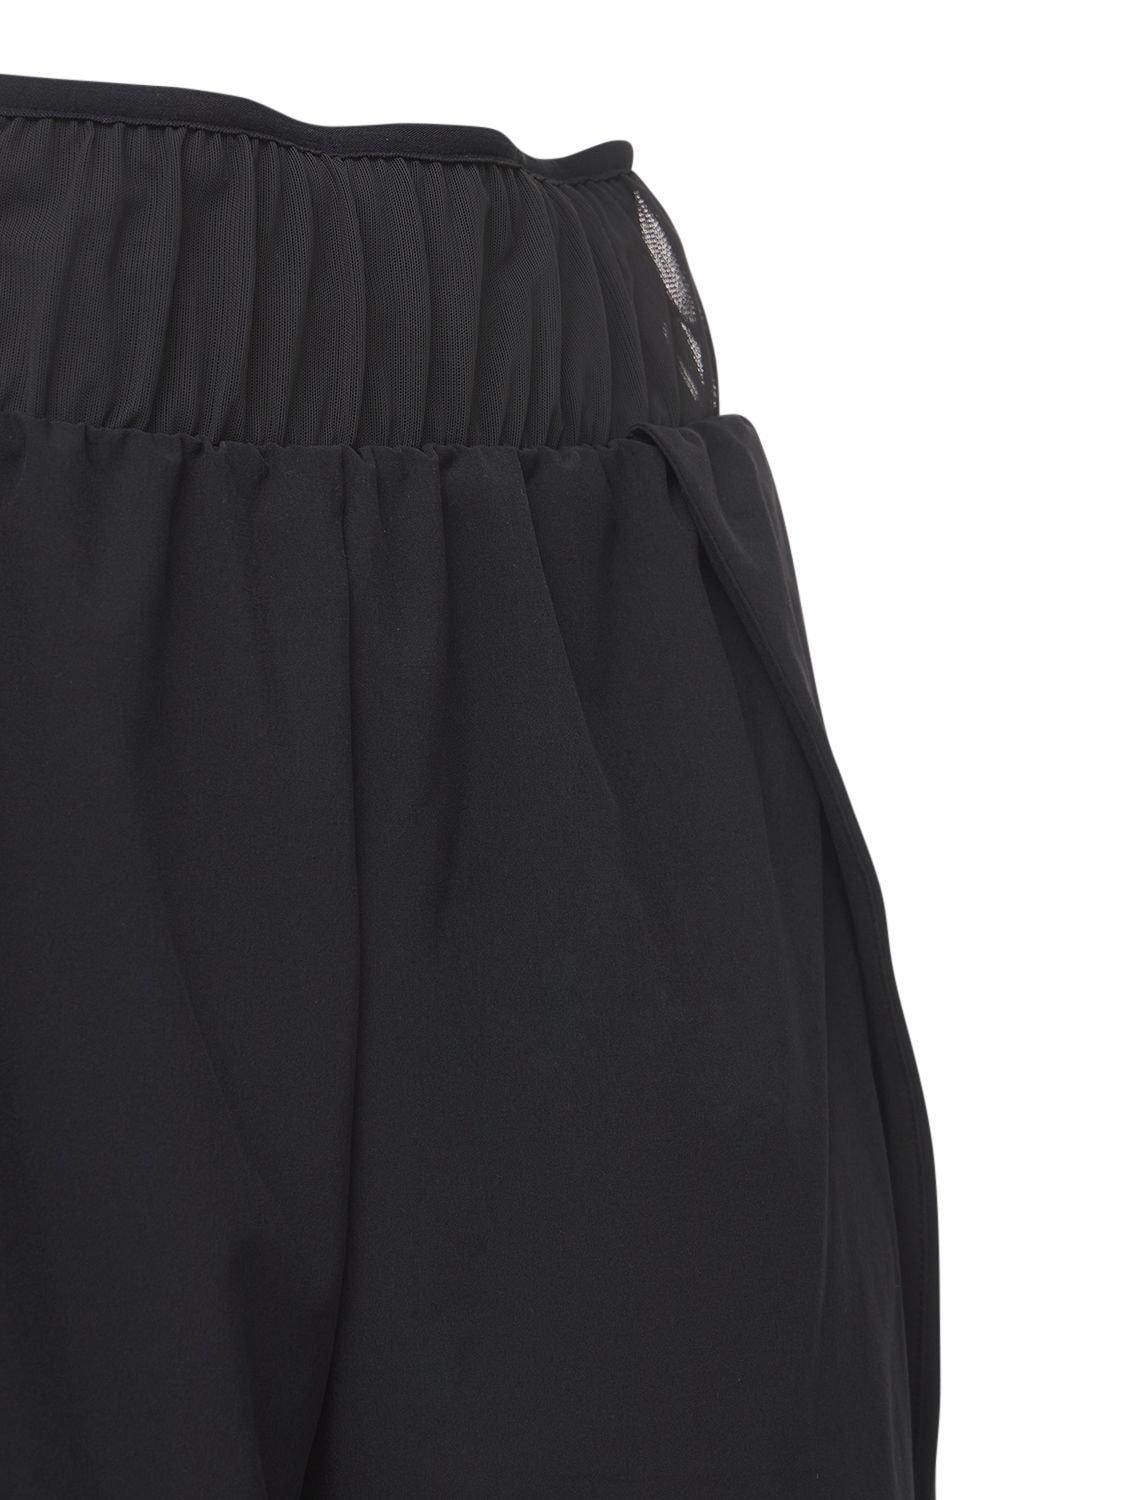 adidas Originals Dance Pants in Black | Lyst